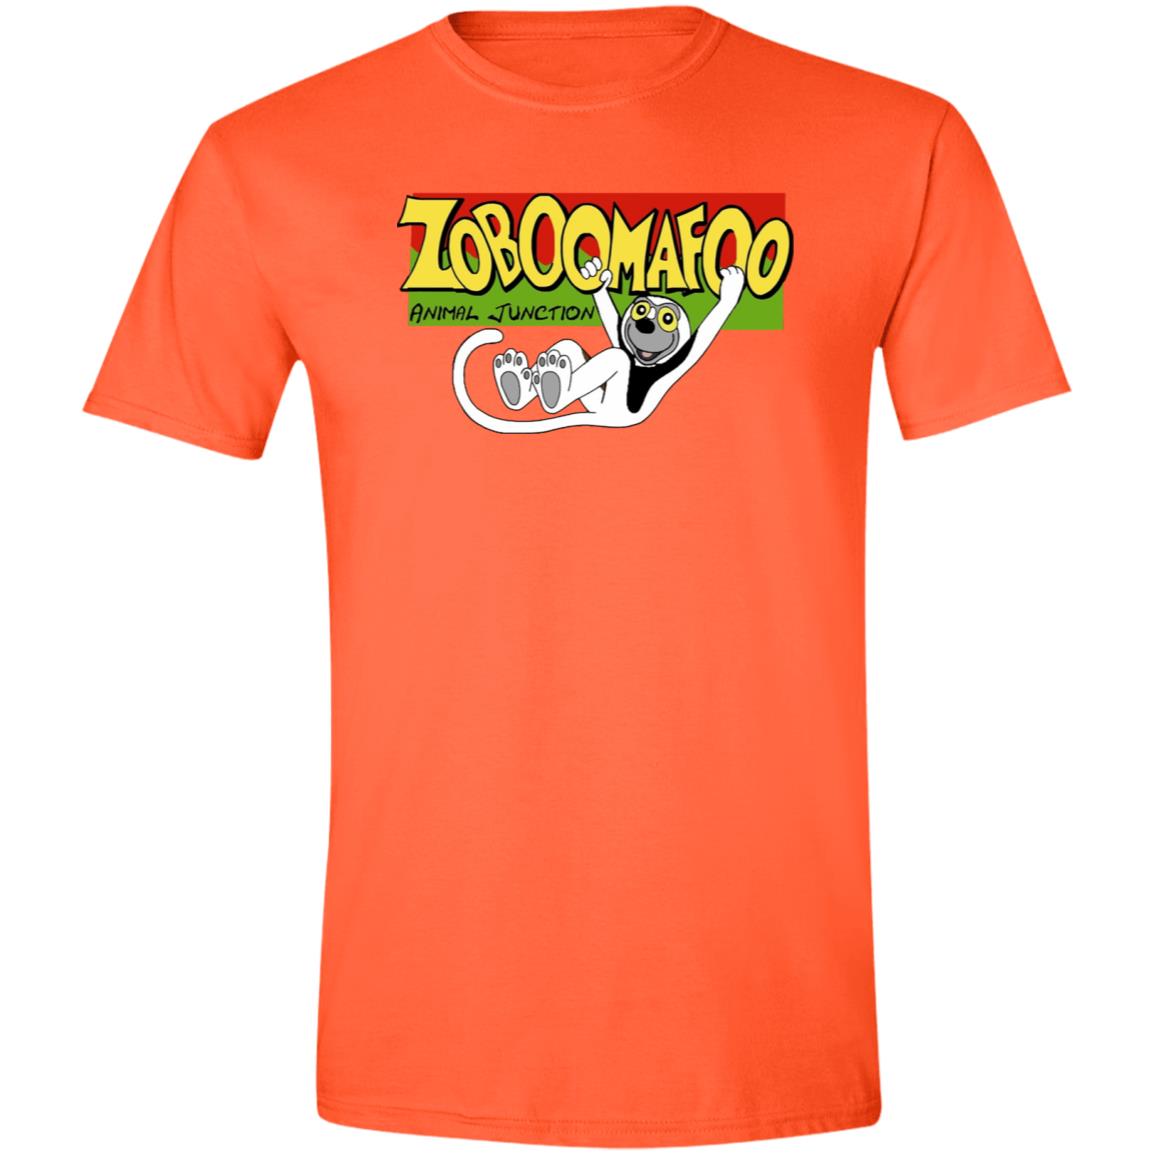 Zoboomafoo Shirt, T-Shirt, Hoodie, Tank Top, Sweatshirt